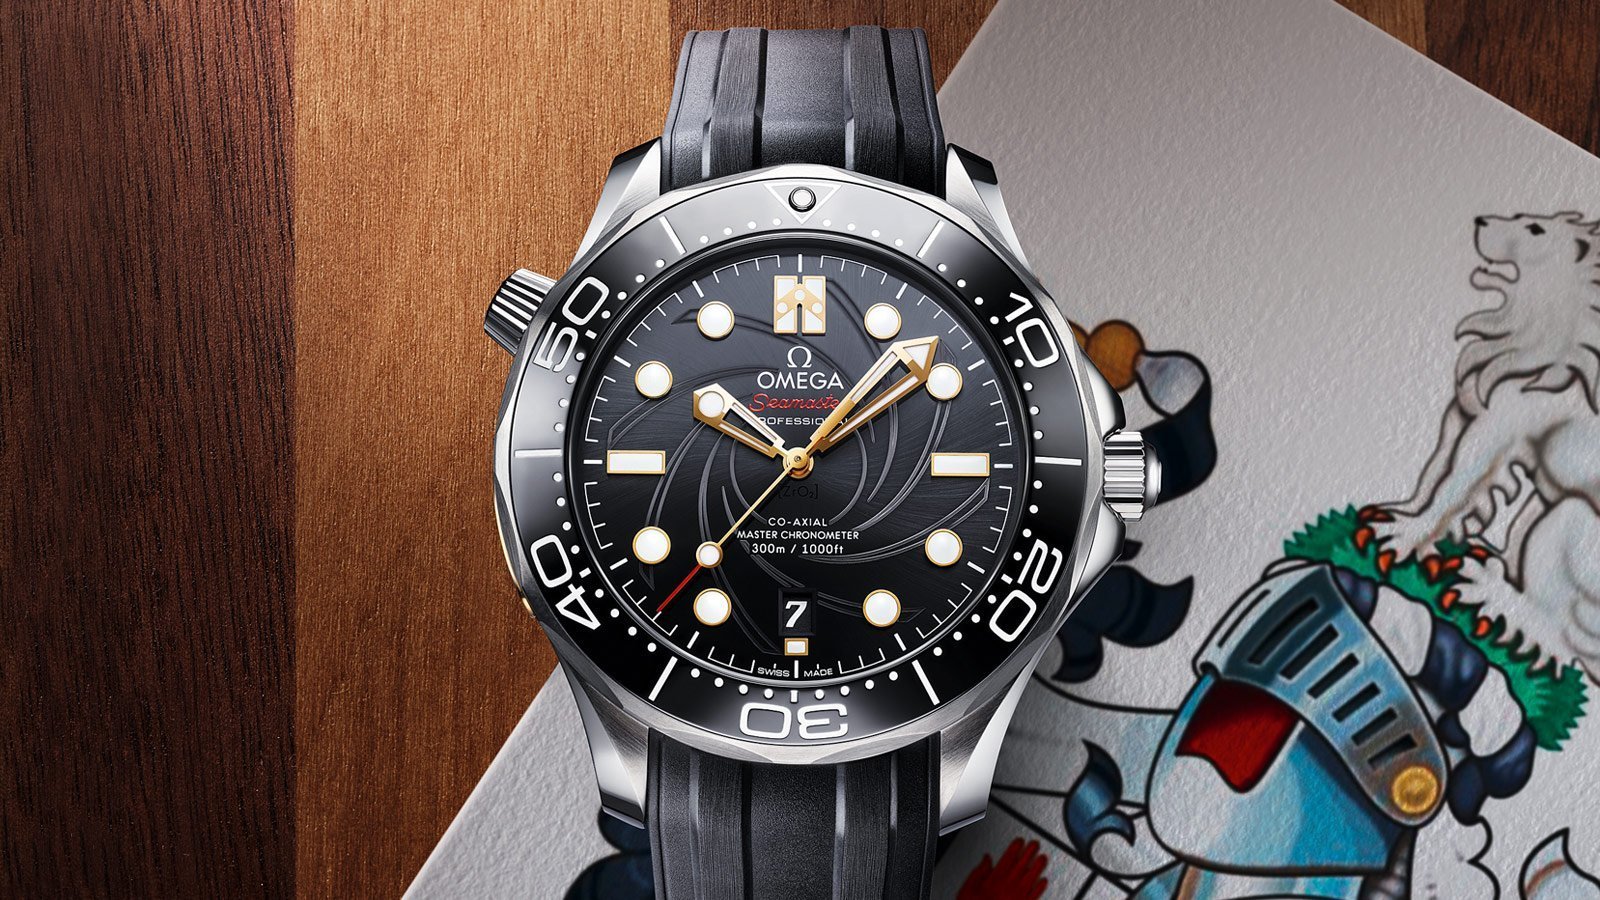 Seamaster Diver 300M “James Bond” Limited Edition